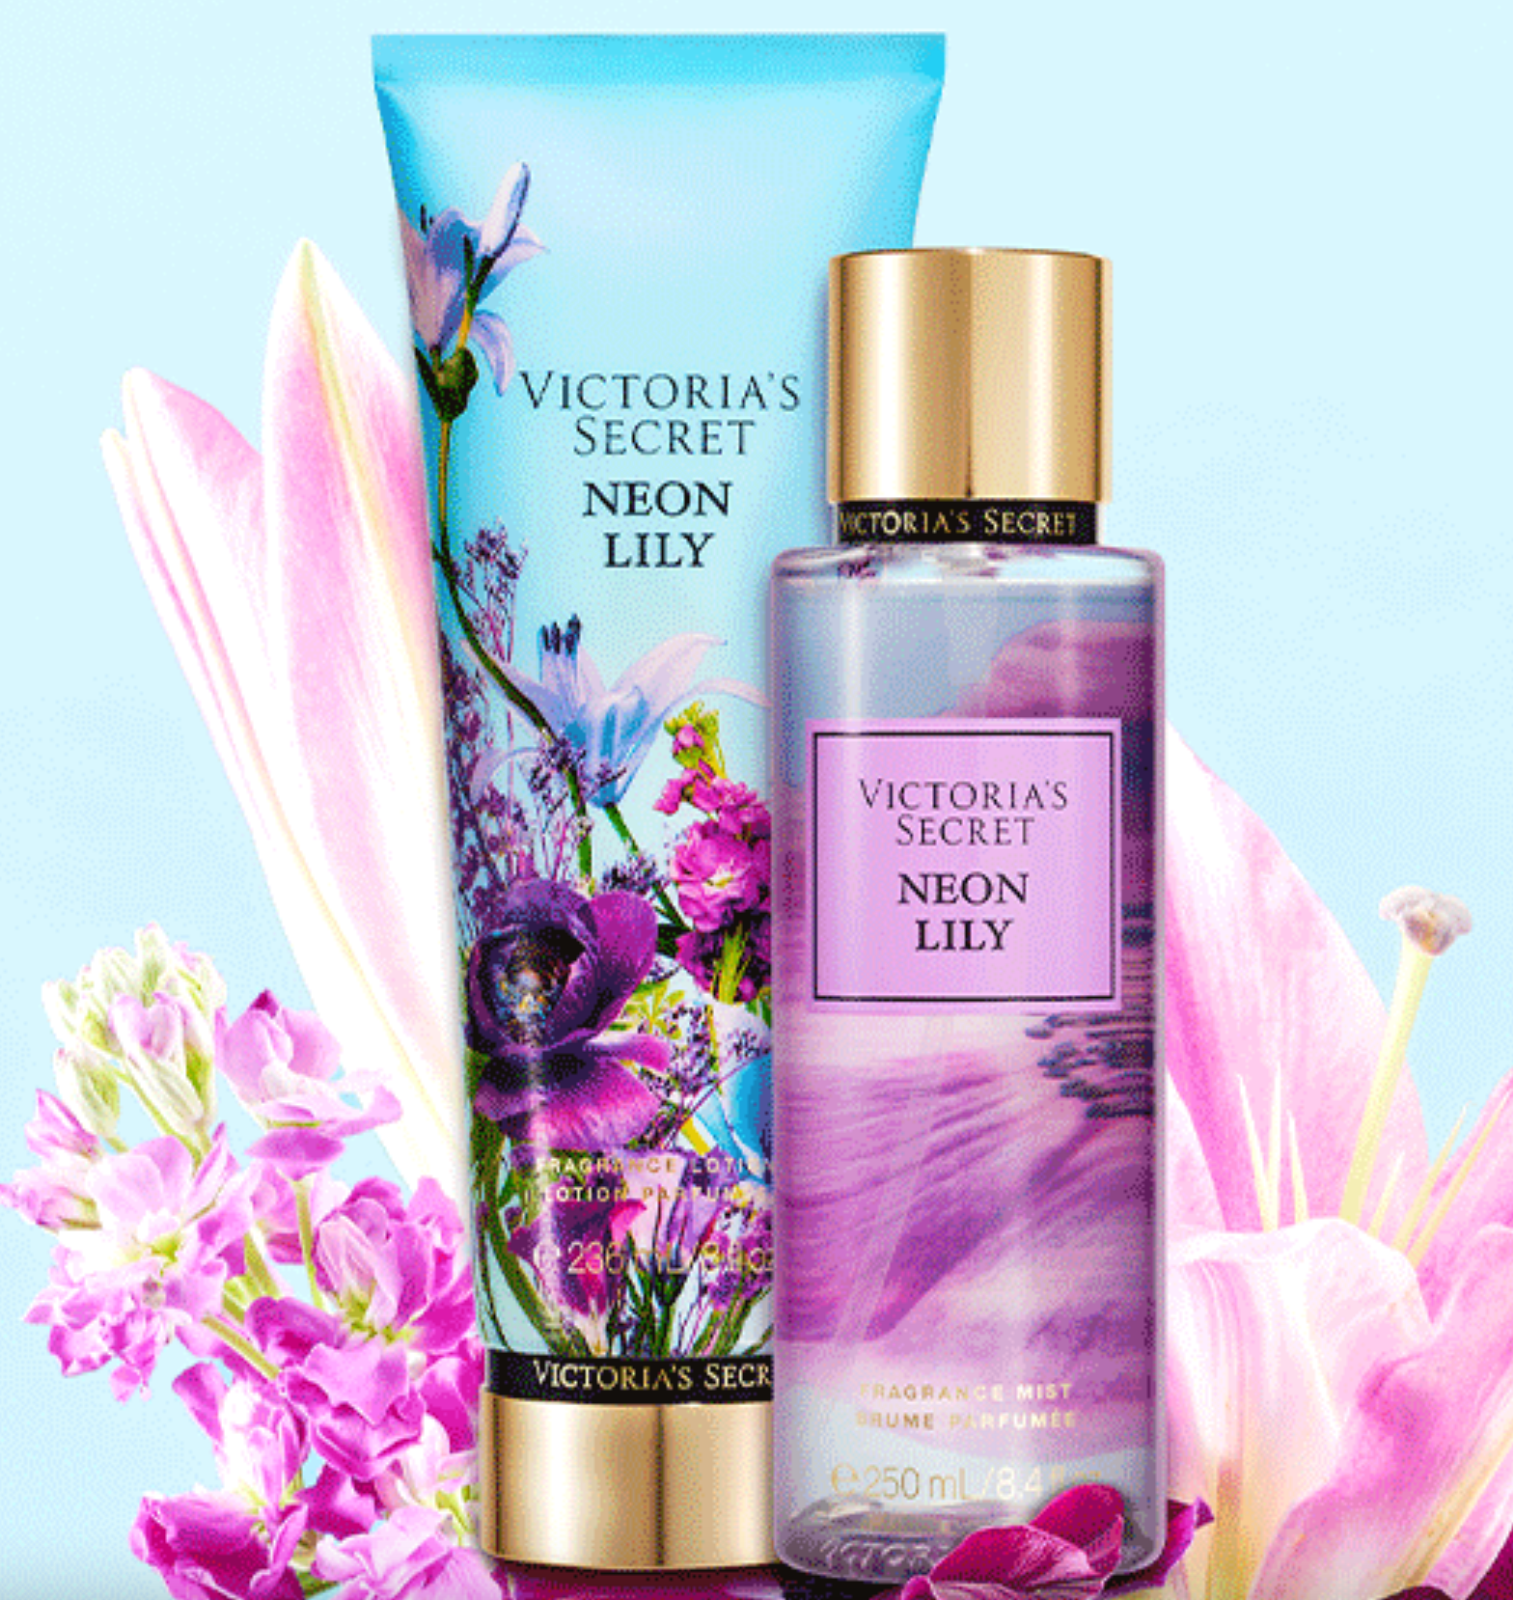 Victoria's Secret Neon Lily Fragrance Lotion + Fragrance Mist Duo Set - $39.95